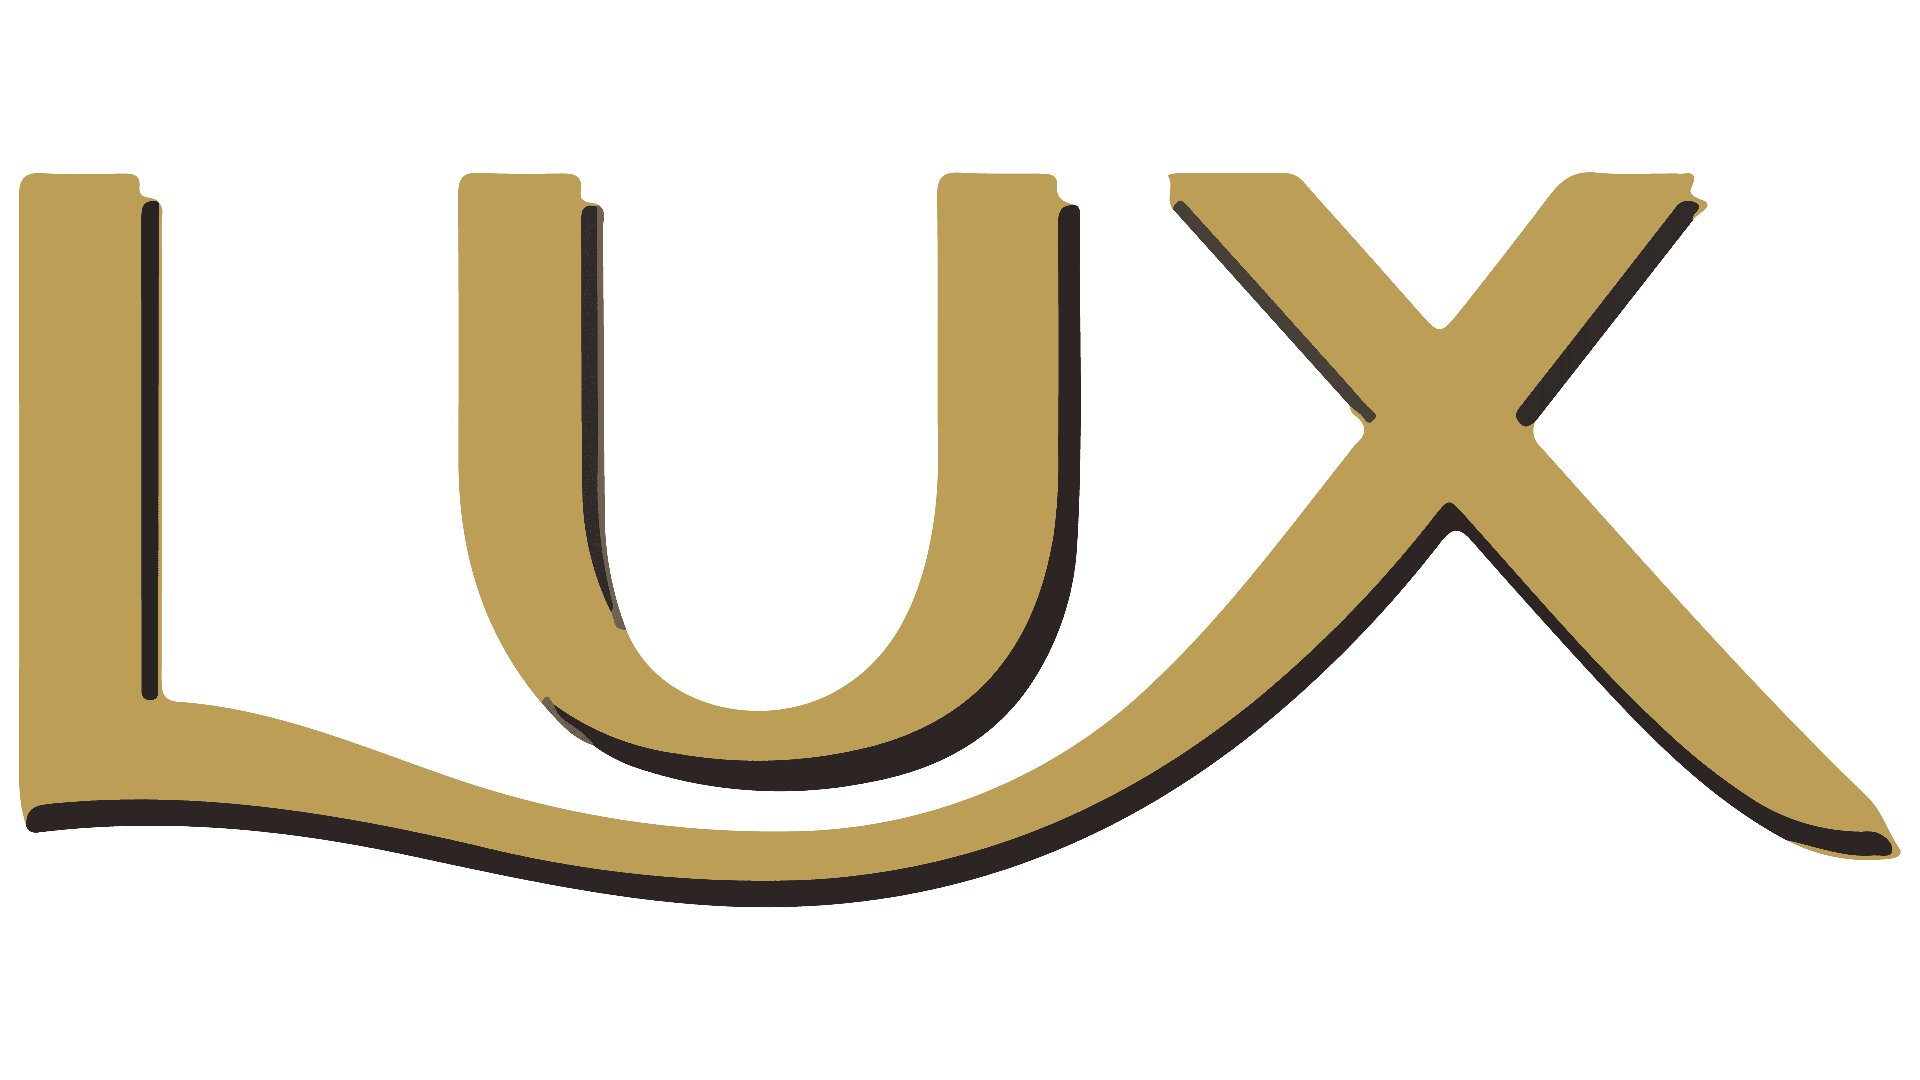 Brand: Lux